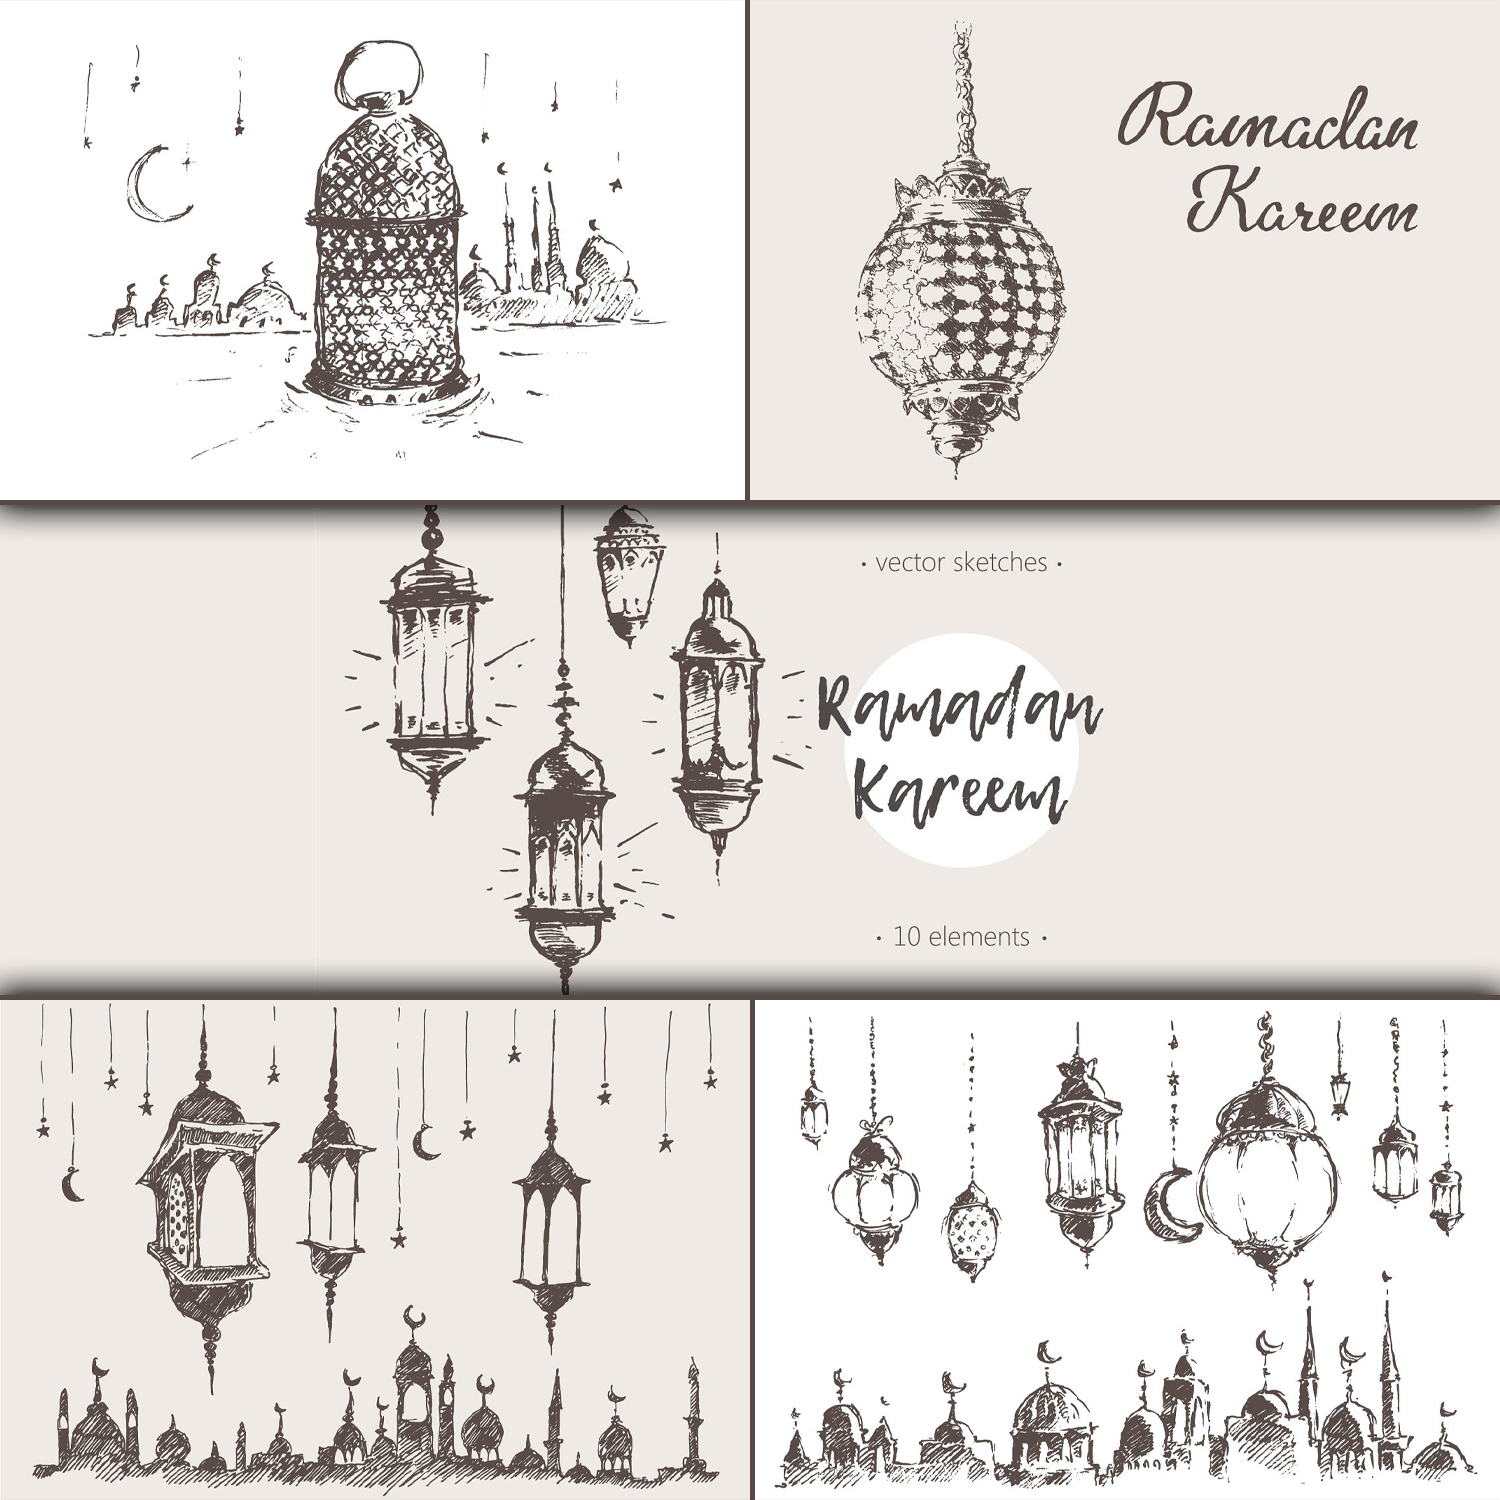 Prints of big set of ramadan kareem sketches.